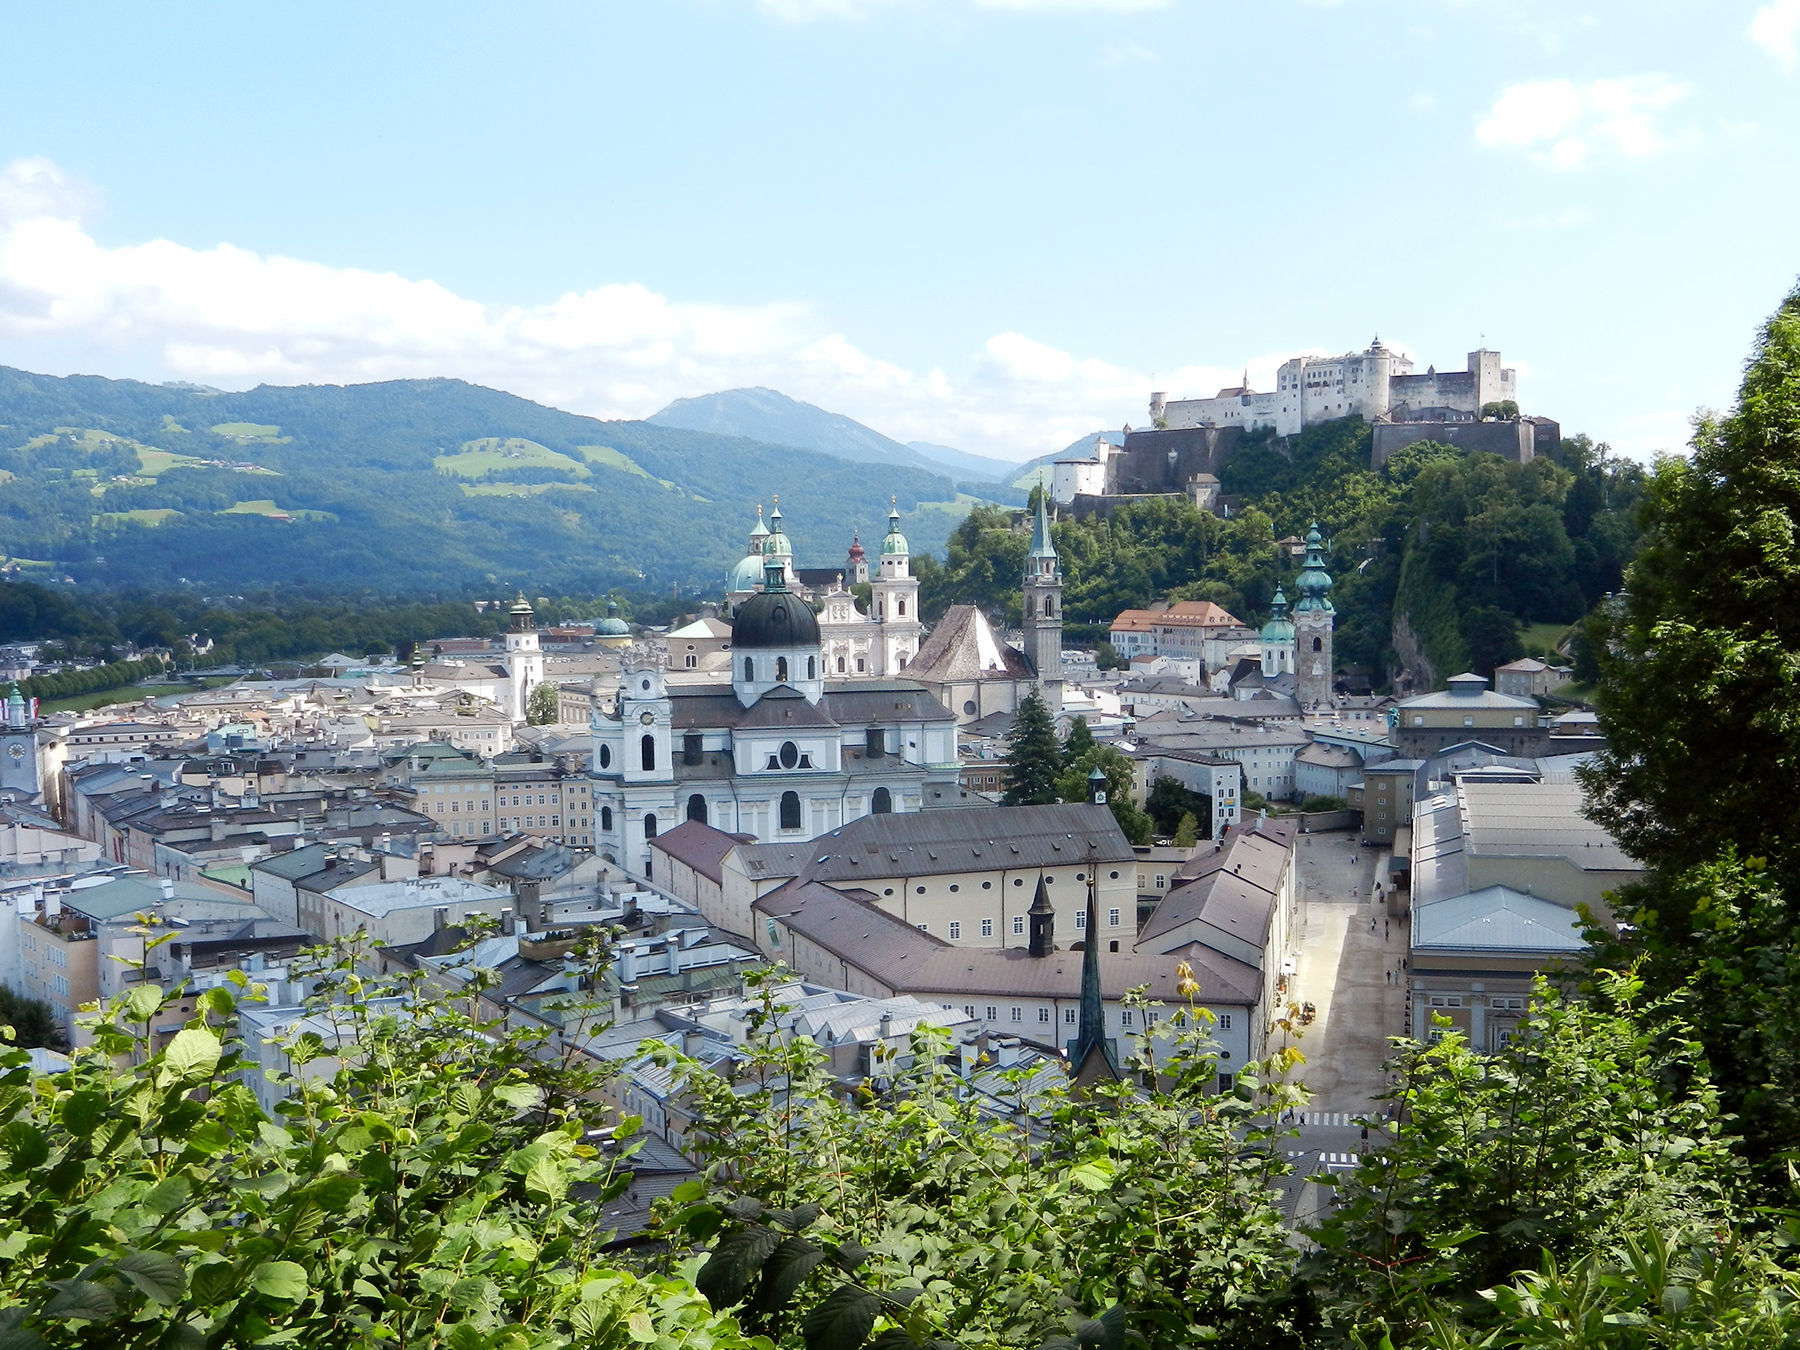 Exploring Hohensalzburg Fortress Salzburg - The World Is A Book